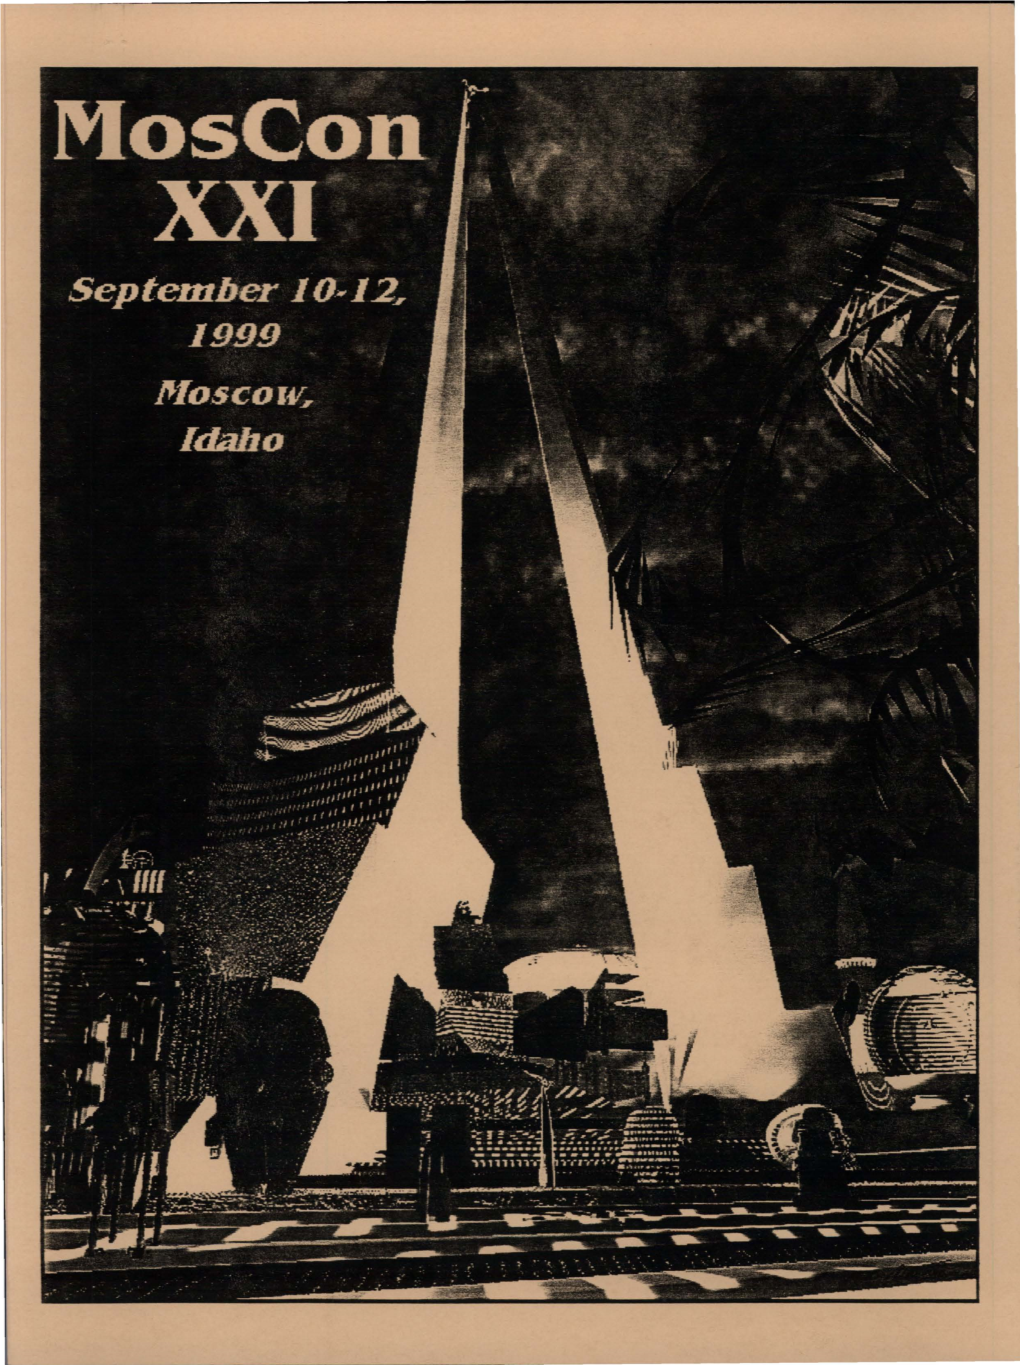 Mosconxxi September 10-12, 1999